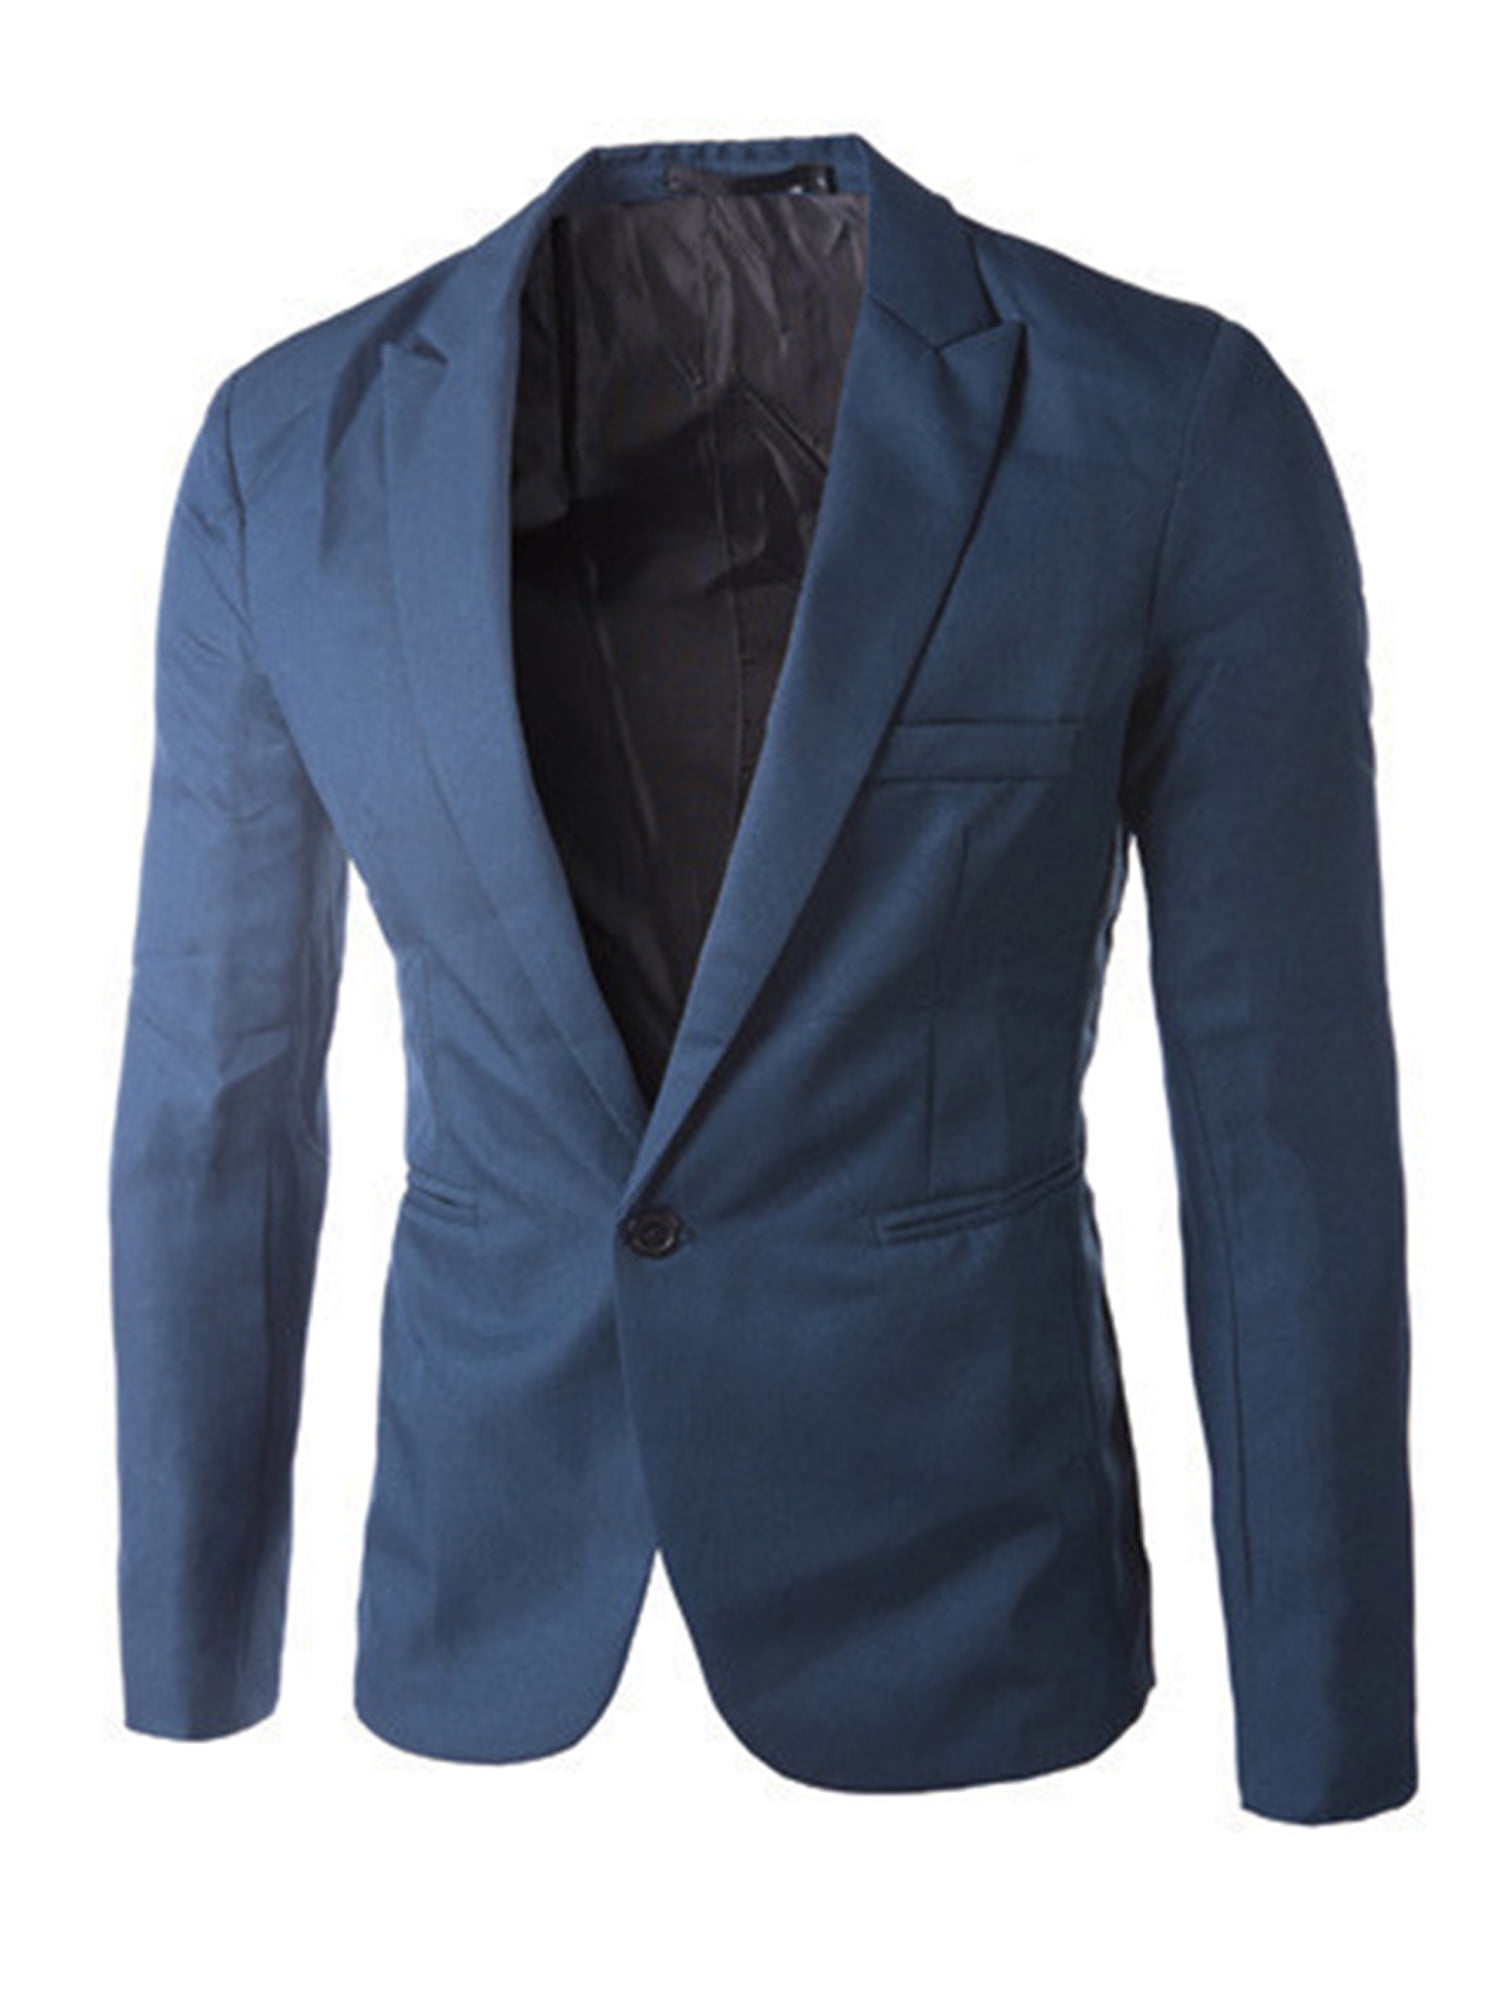 Men Casual Slim Fit One Button Suit Blazer Business Work Coat Jacket Outwear Top 